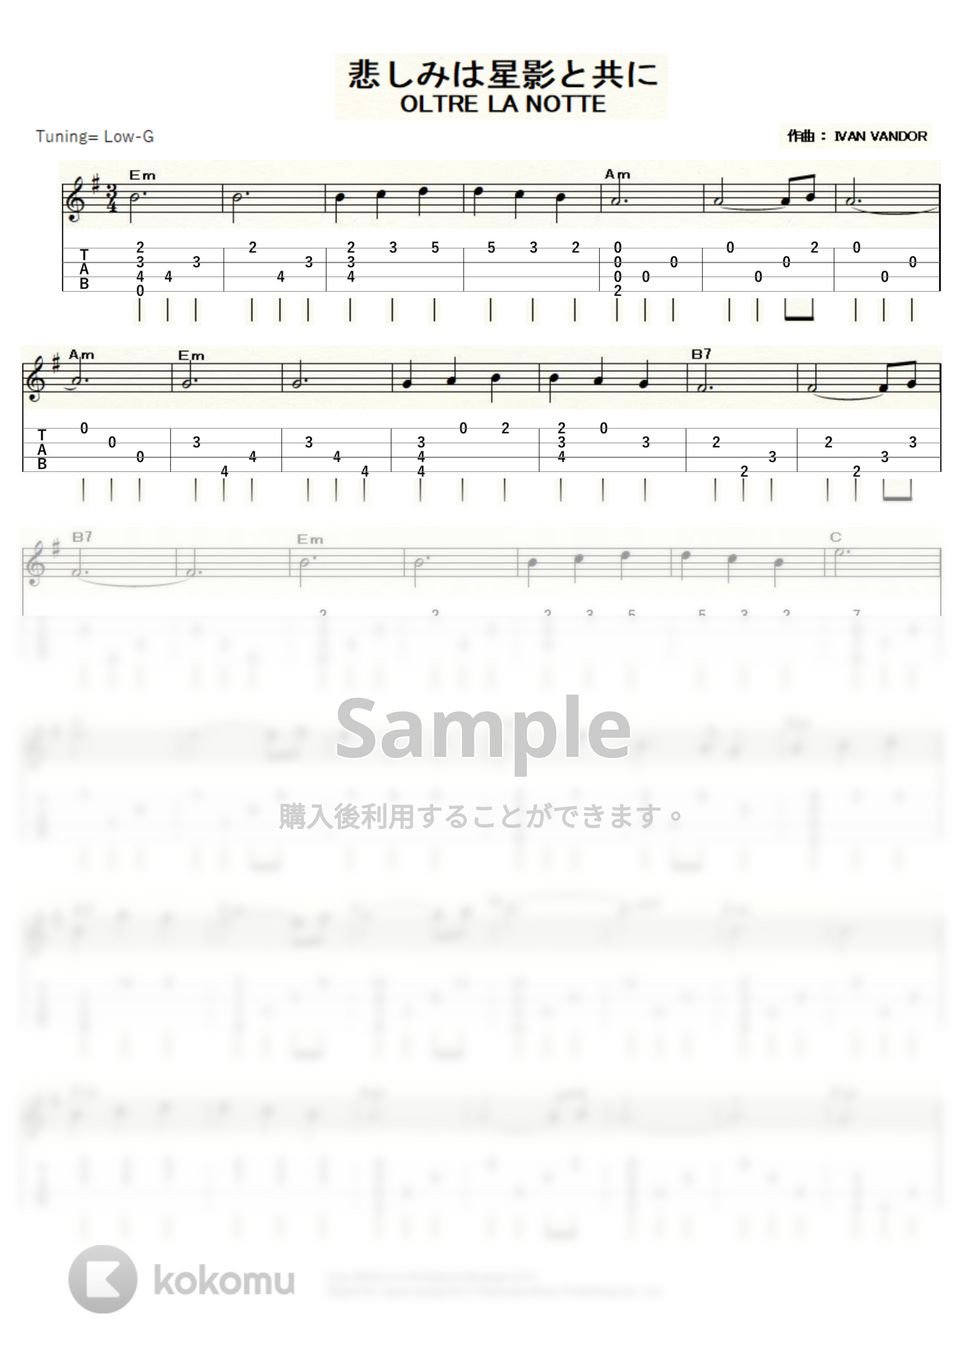 VANDOR IVAN - 悲しみは星影と共に (ｳｸﾚﾚｿﾛ / Low-G / 中級) by ukulelepapa